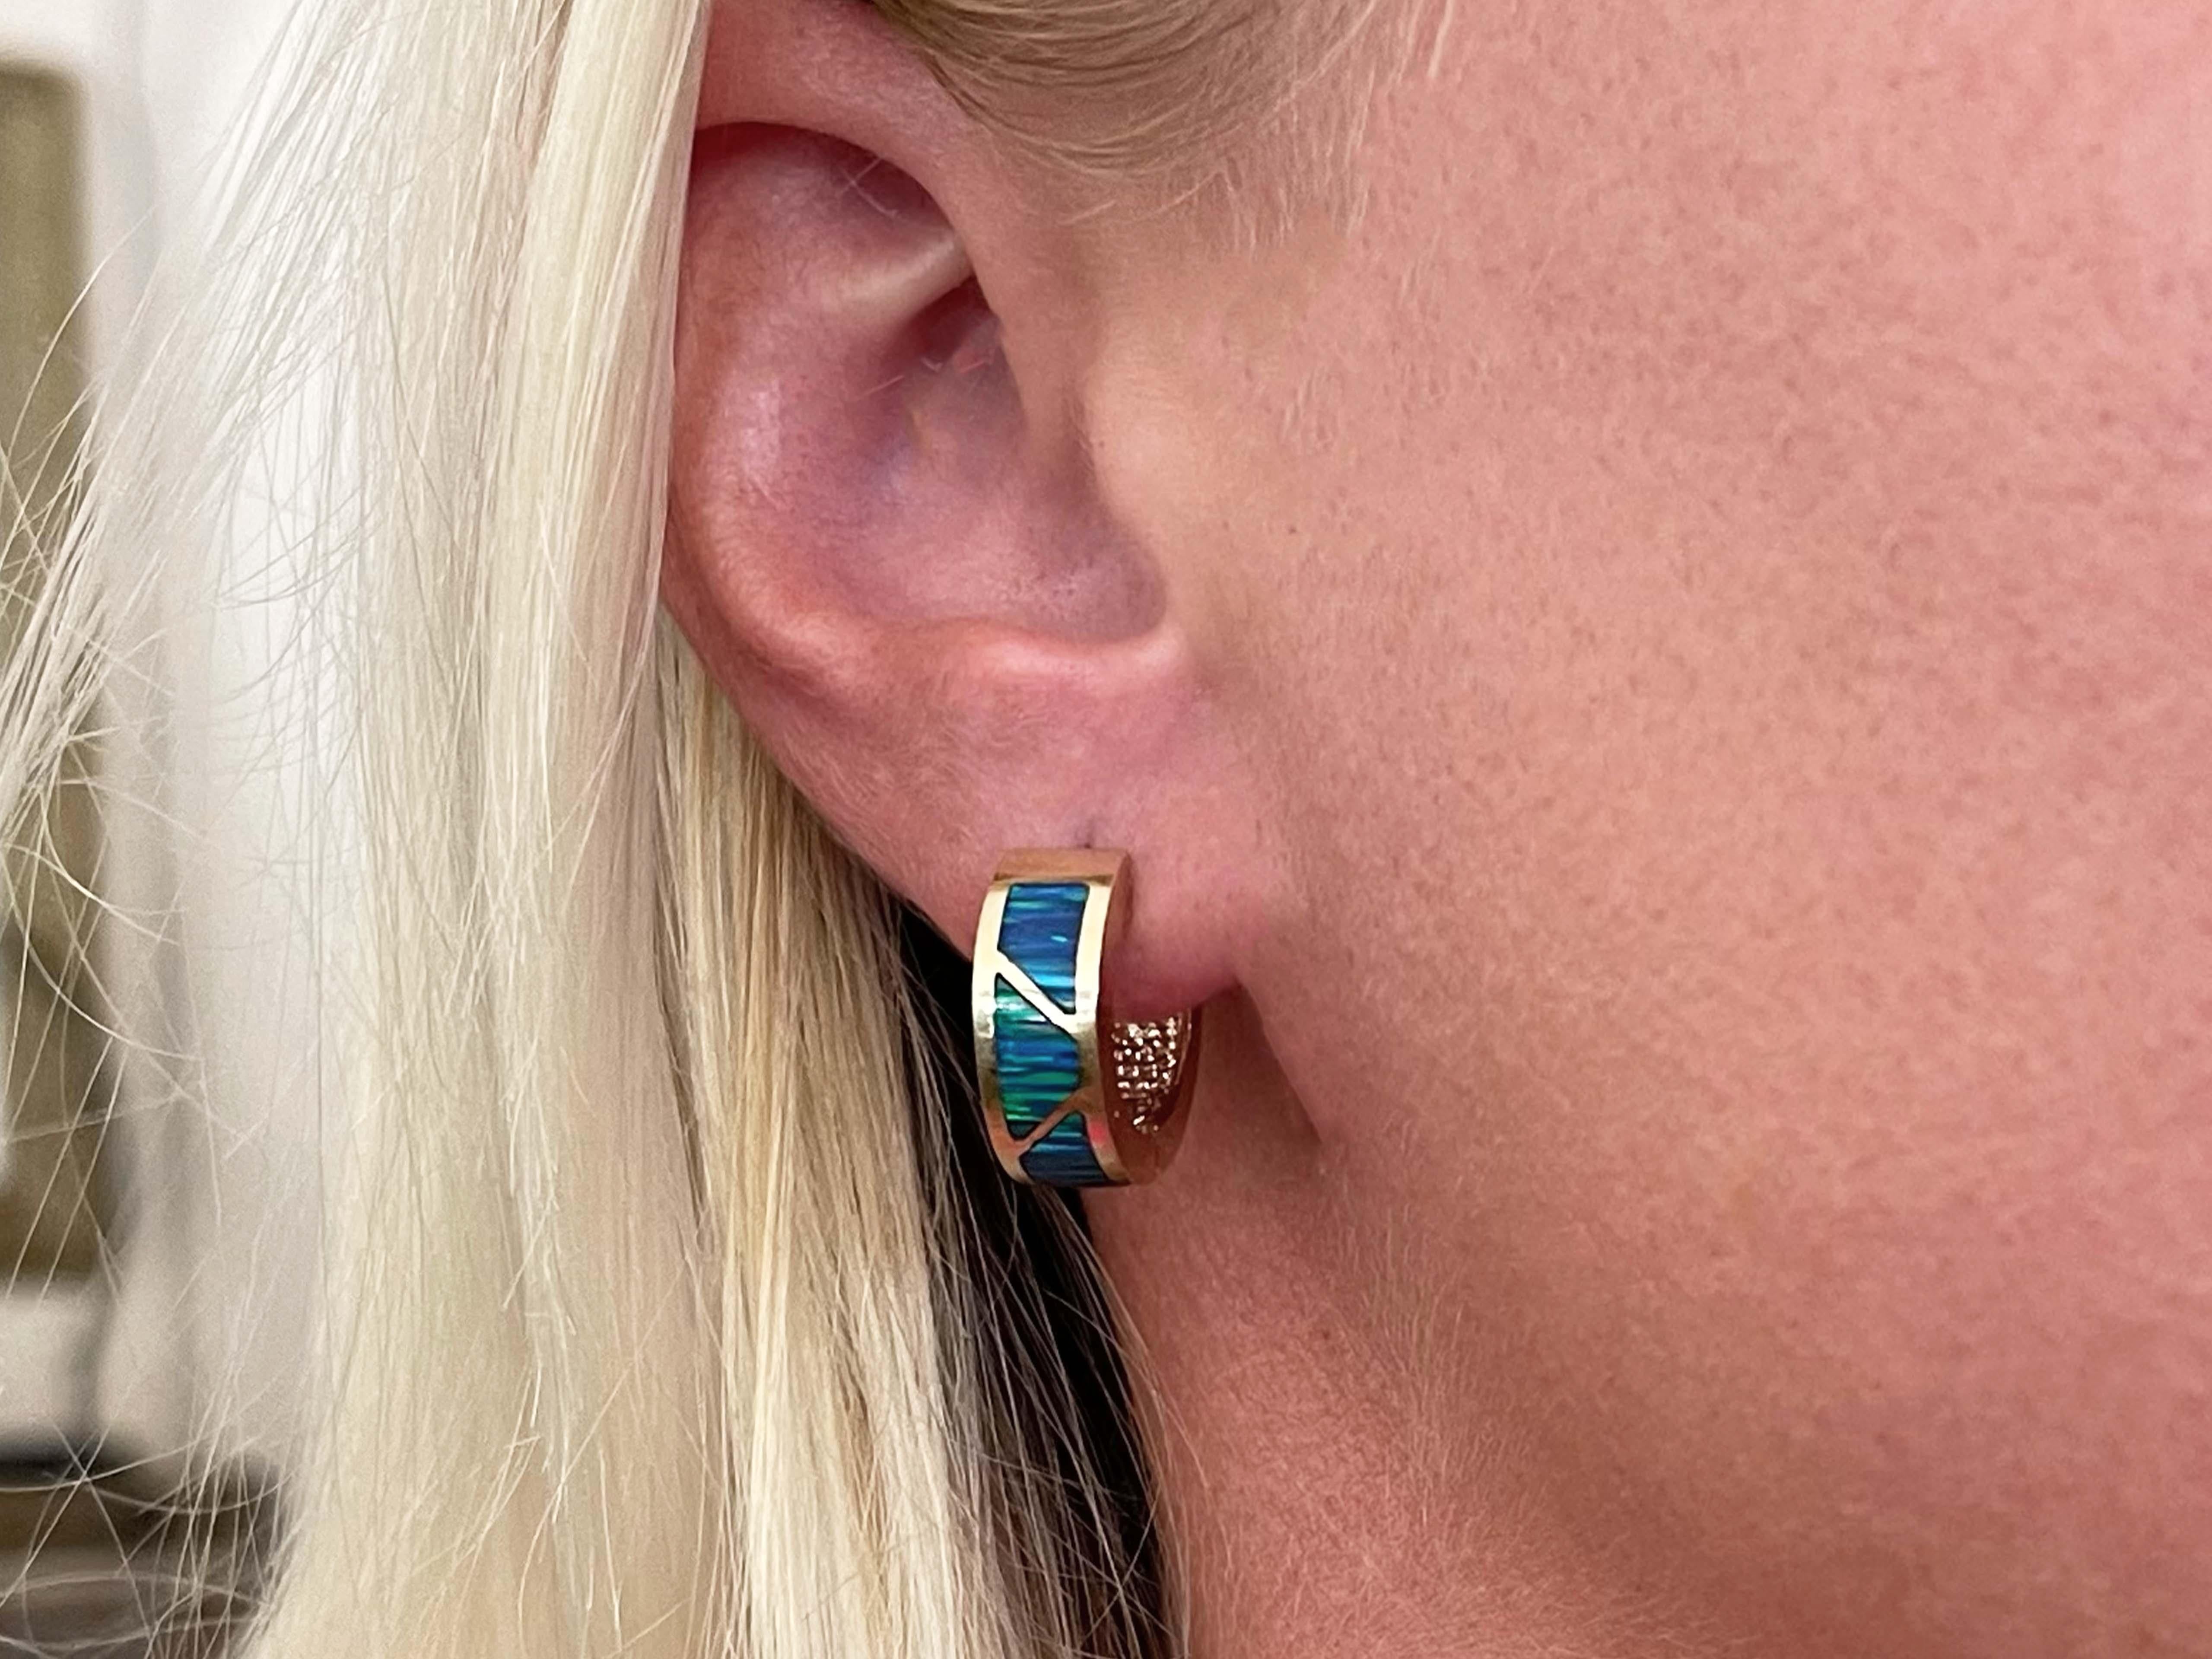 Earrings Specifications:

Metal: 14k Yellow Gold

Earring Diameter: 18 mm

Gemstone Inlay: Black Opal

Total Weight: 11.1 Grams

Stamped: 